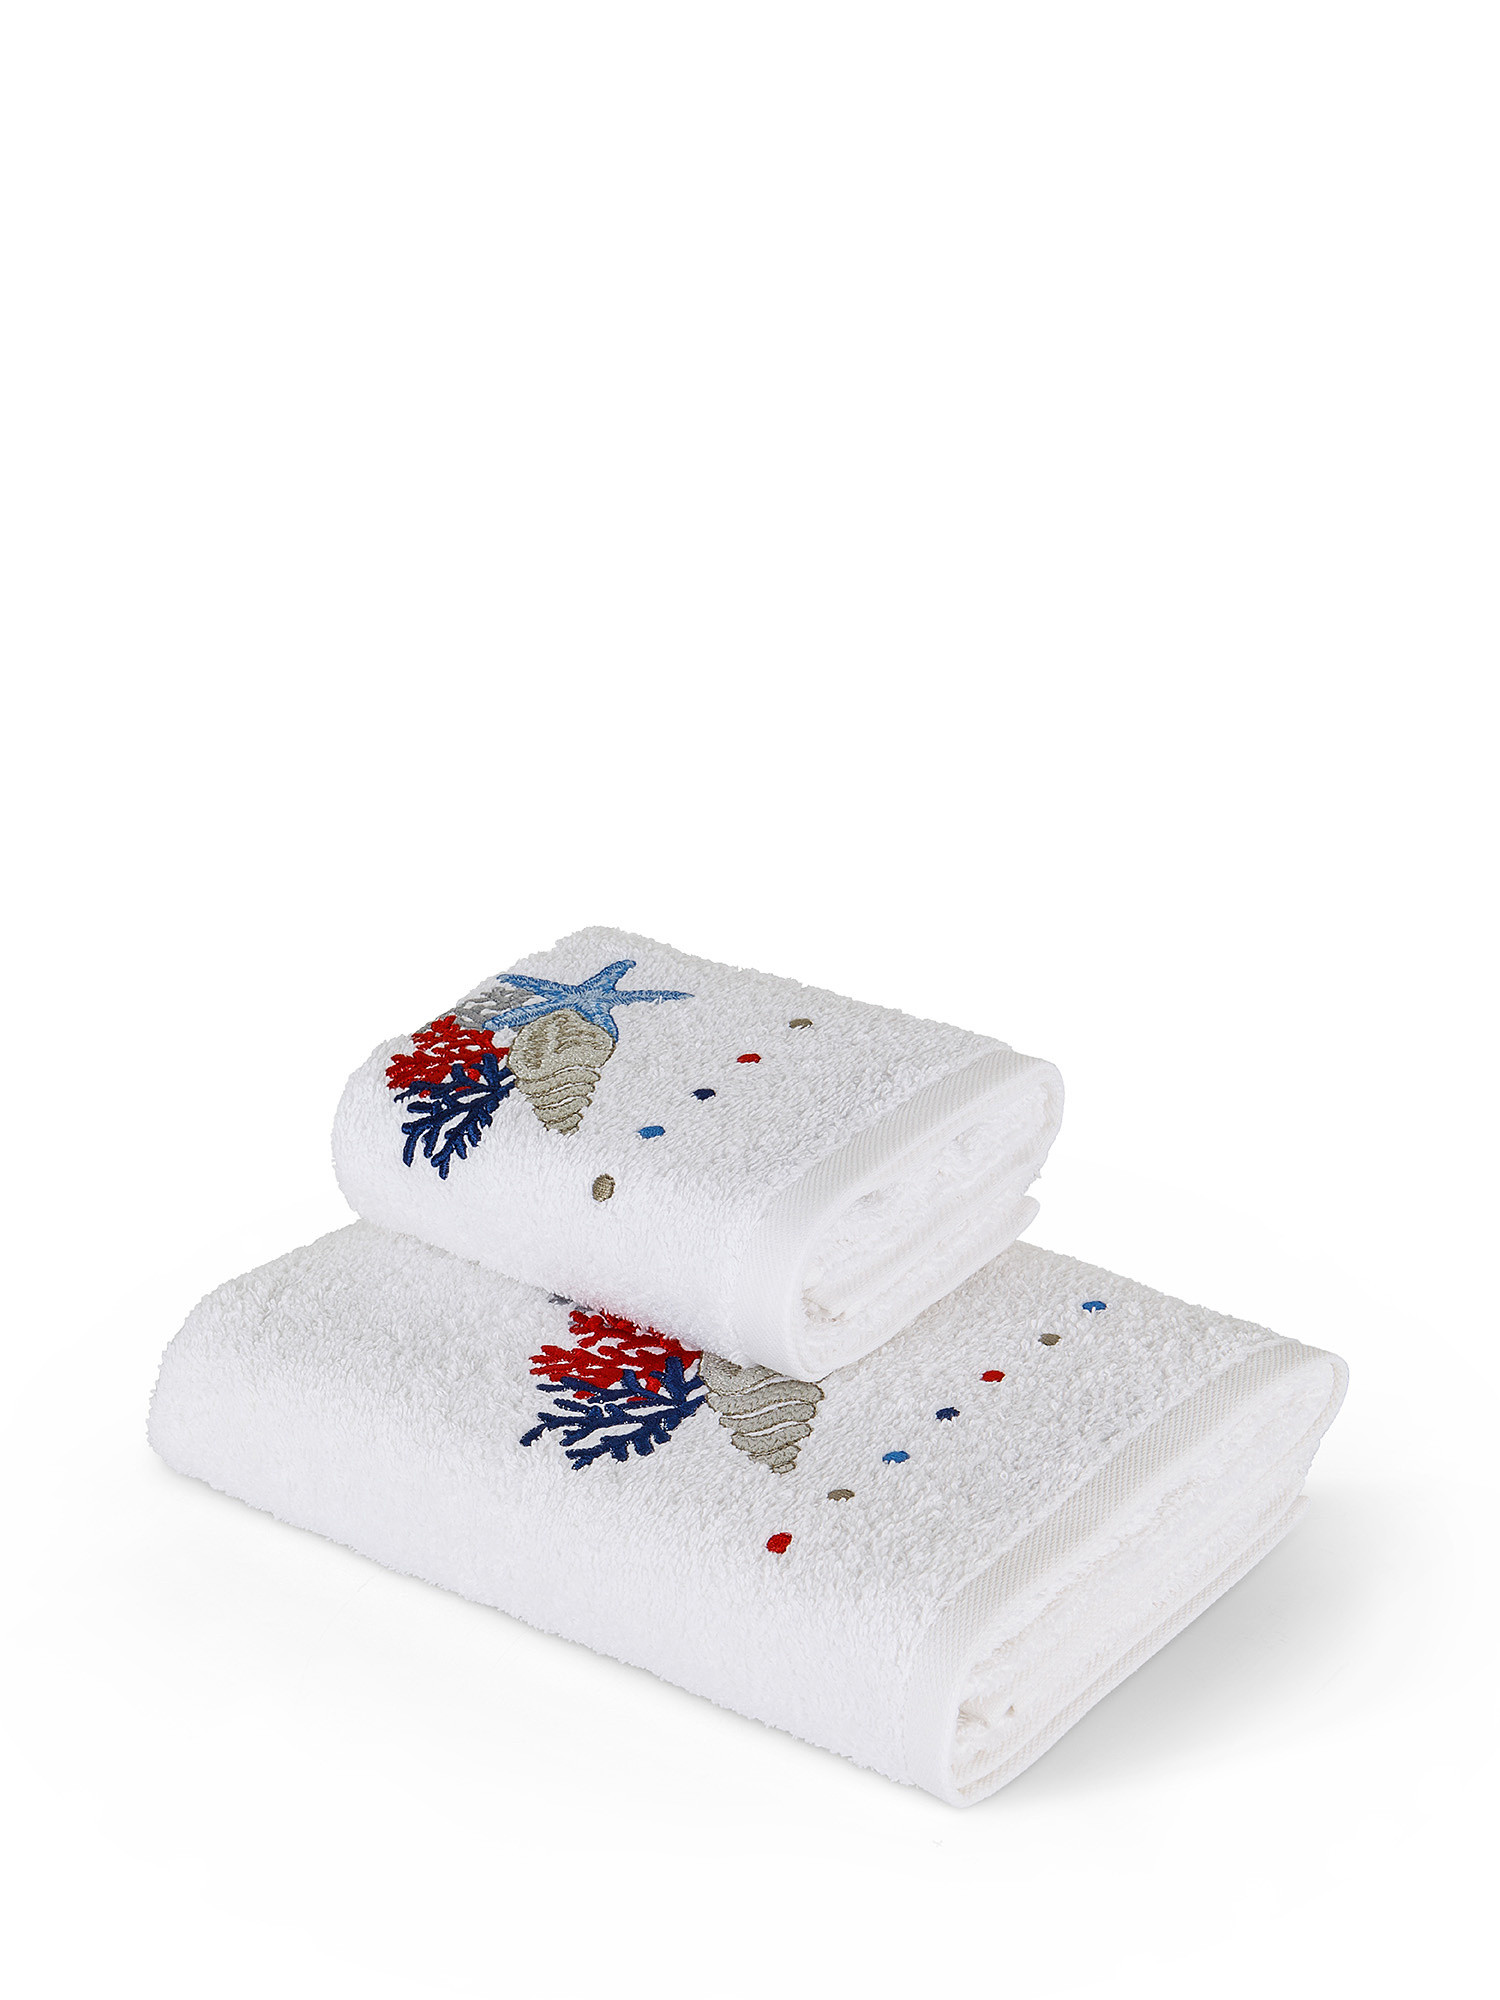 Asciugamano spugna di cotone ricamo conchiglie, Beige, large image number 0